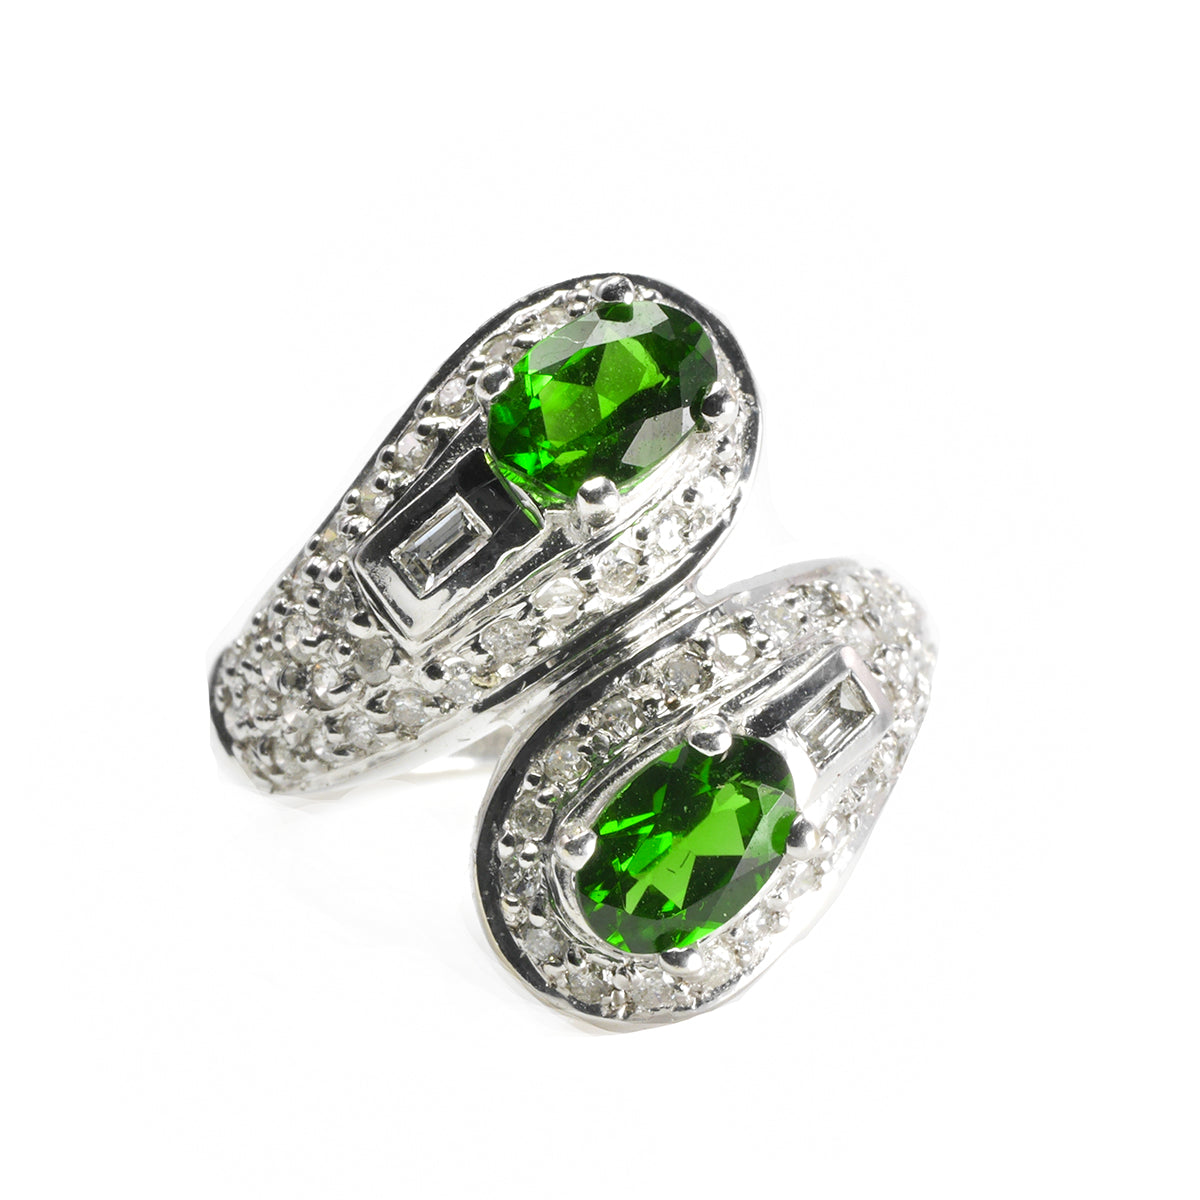 14 k White Gold Diamond and Green Stone Ring